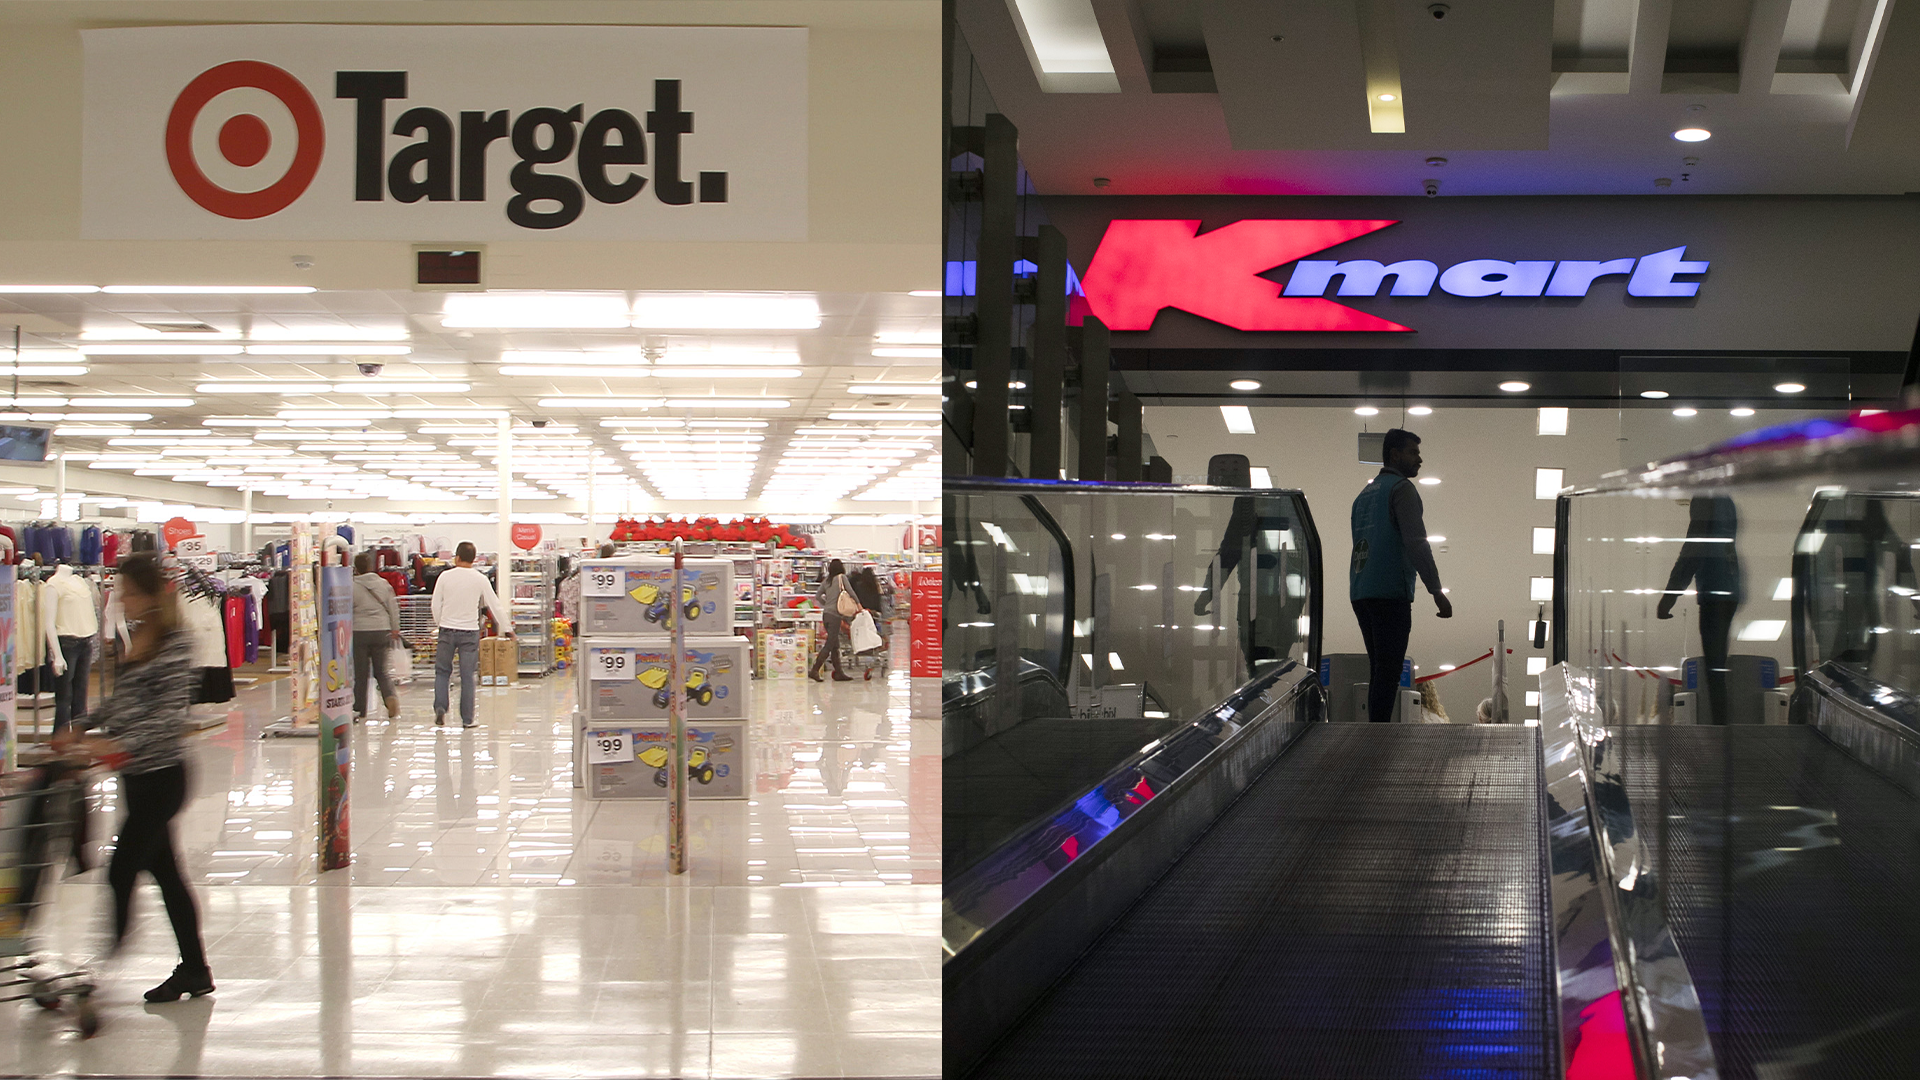 Kmart Target merger: Shake-up to create $10 billion discount